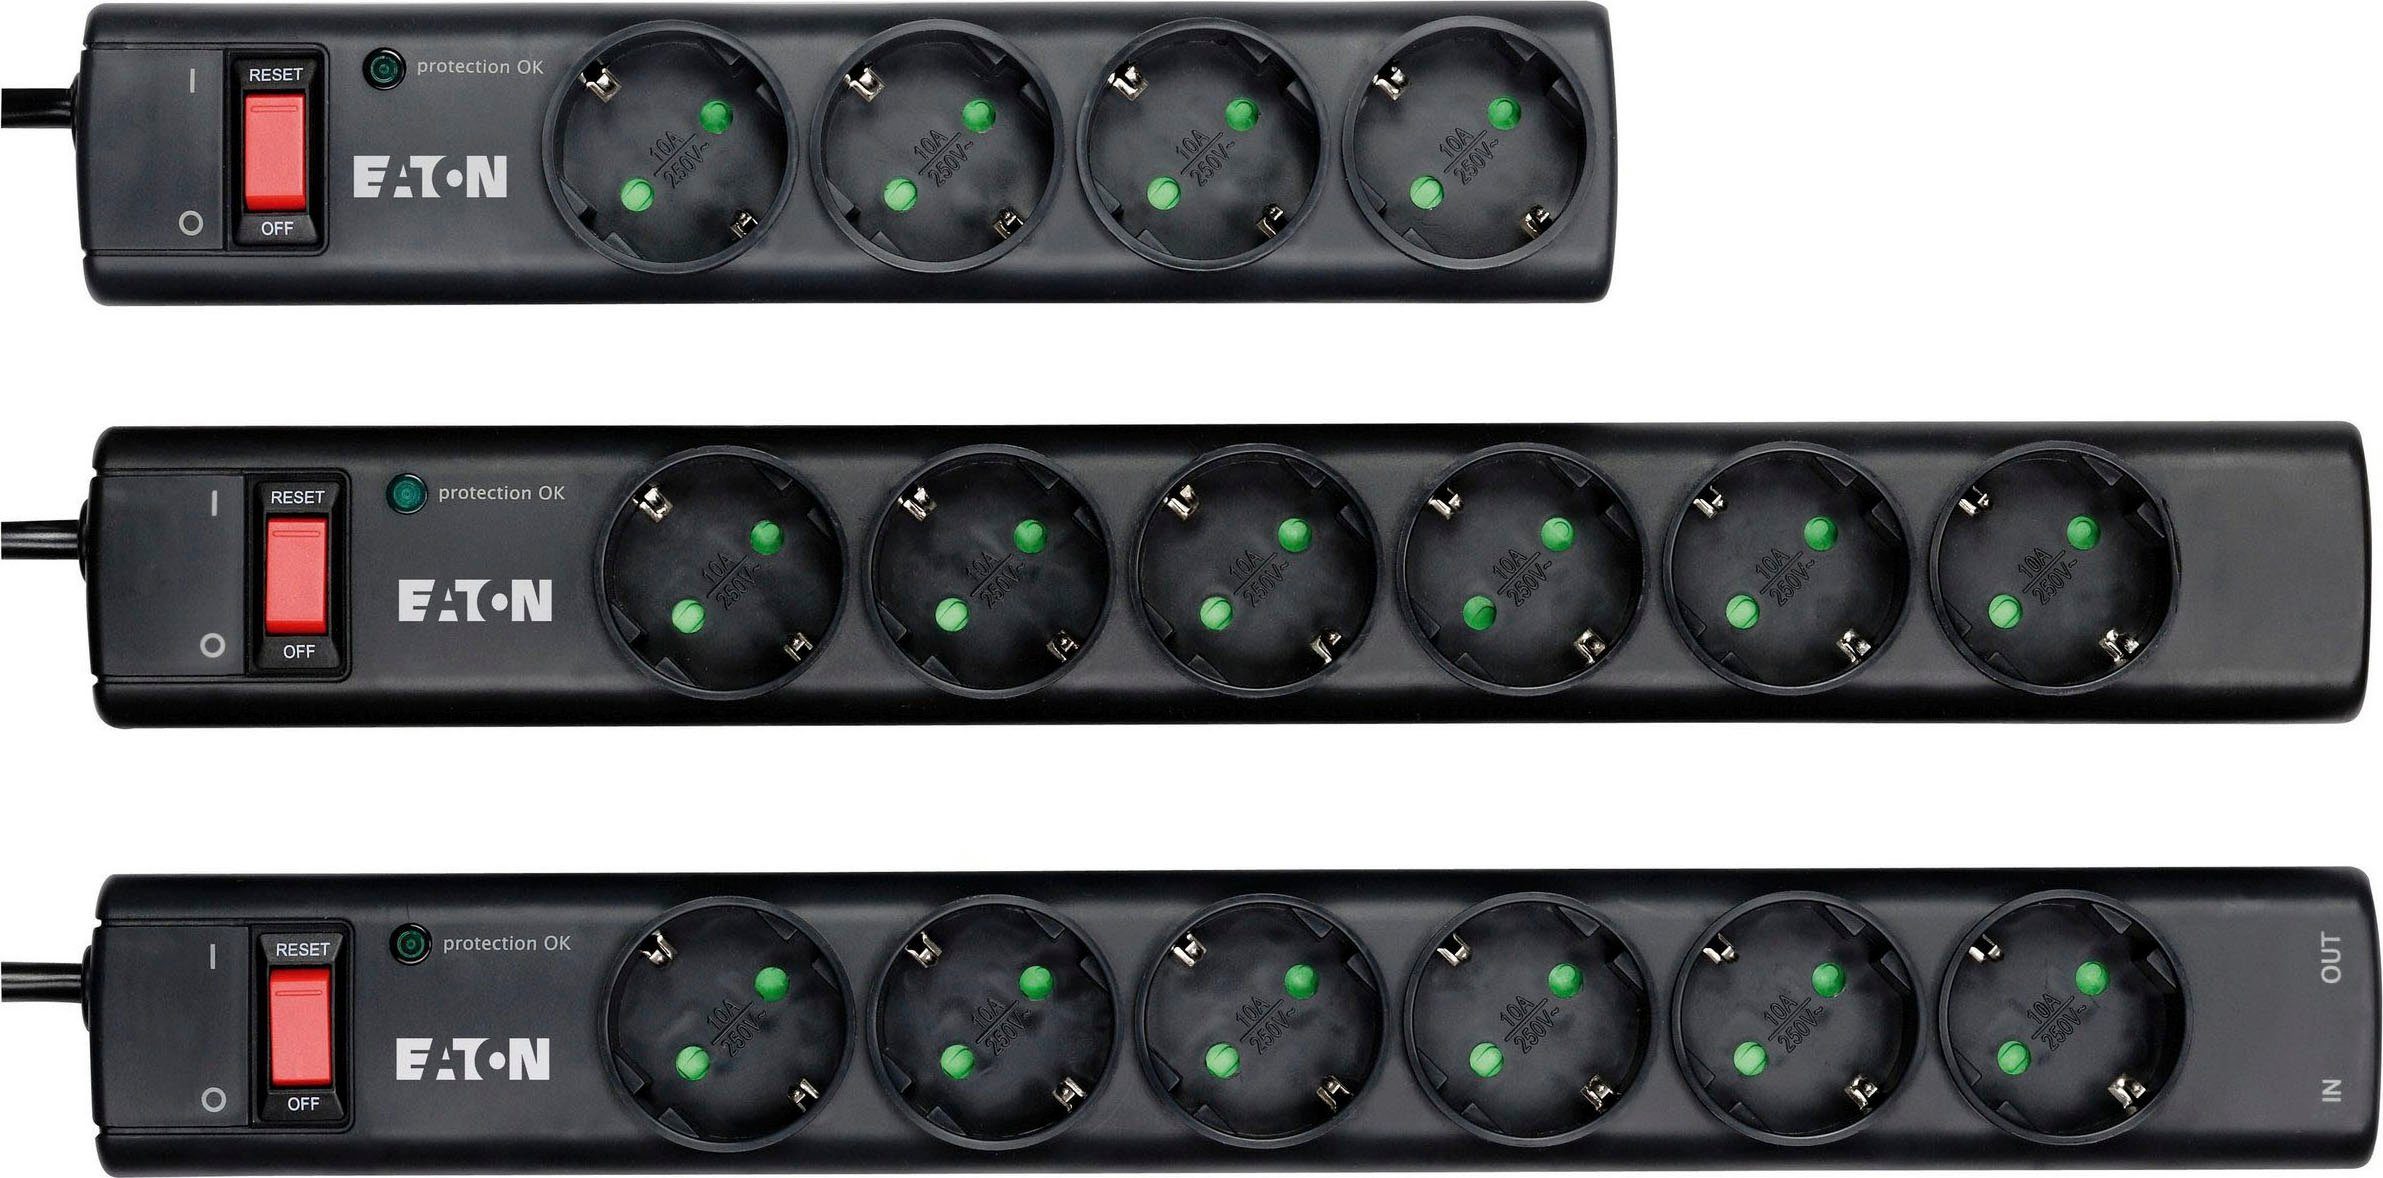 Kabellänge (LED-Statusanzeige, EATON 4-fach 1 m) PS4D Steckdosenleiste